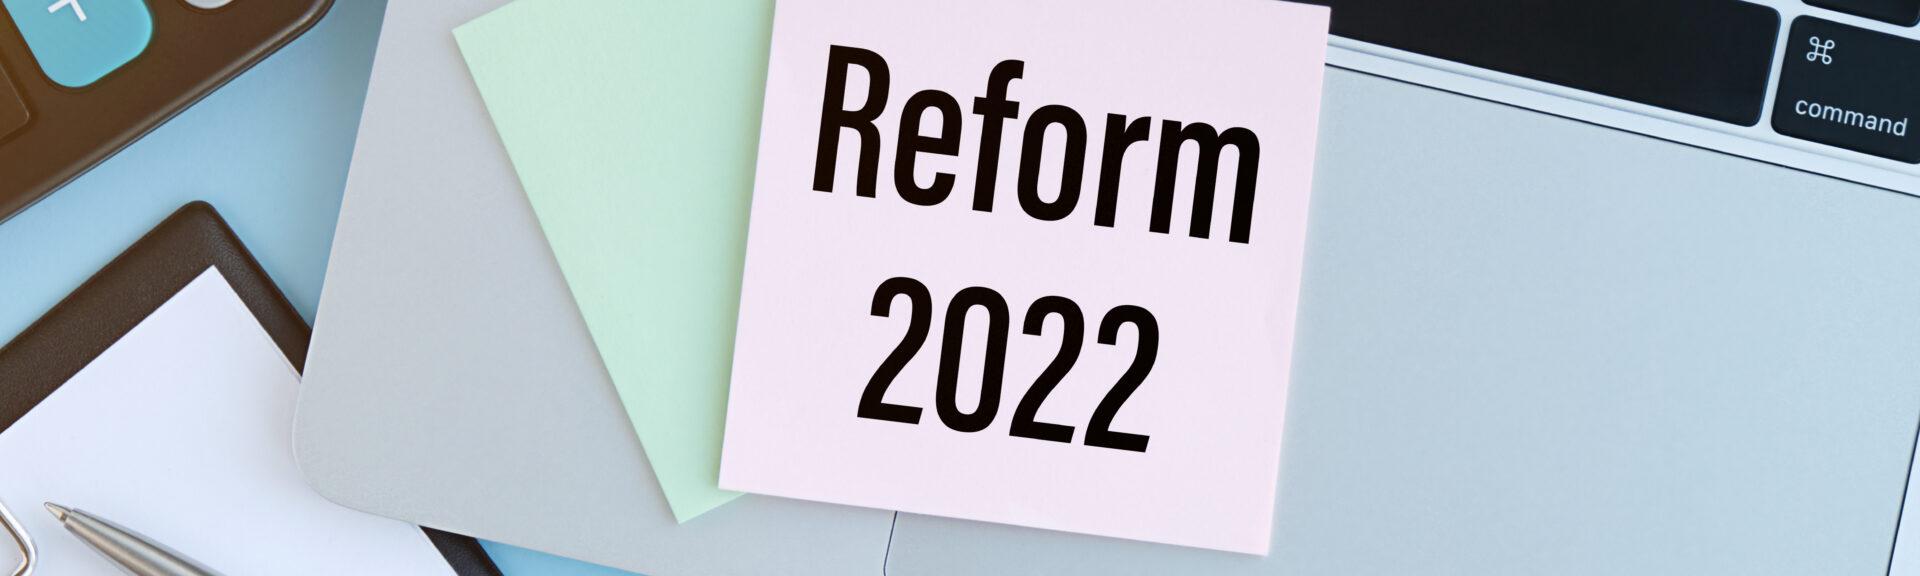 Reform 2022